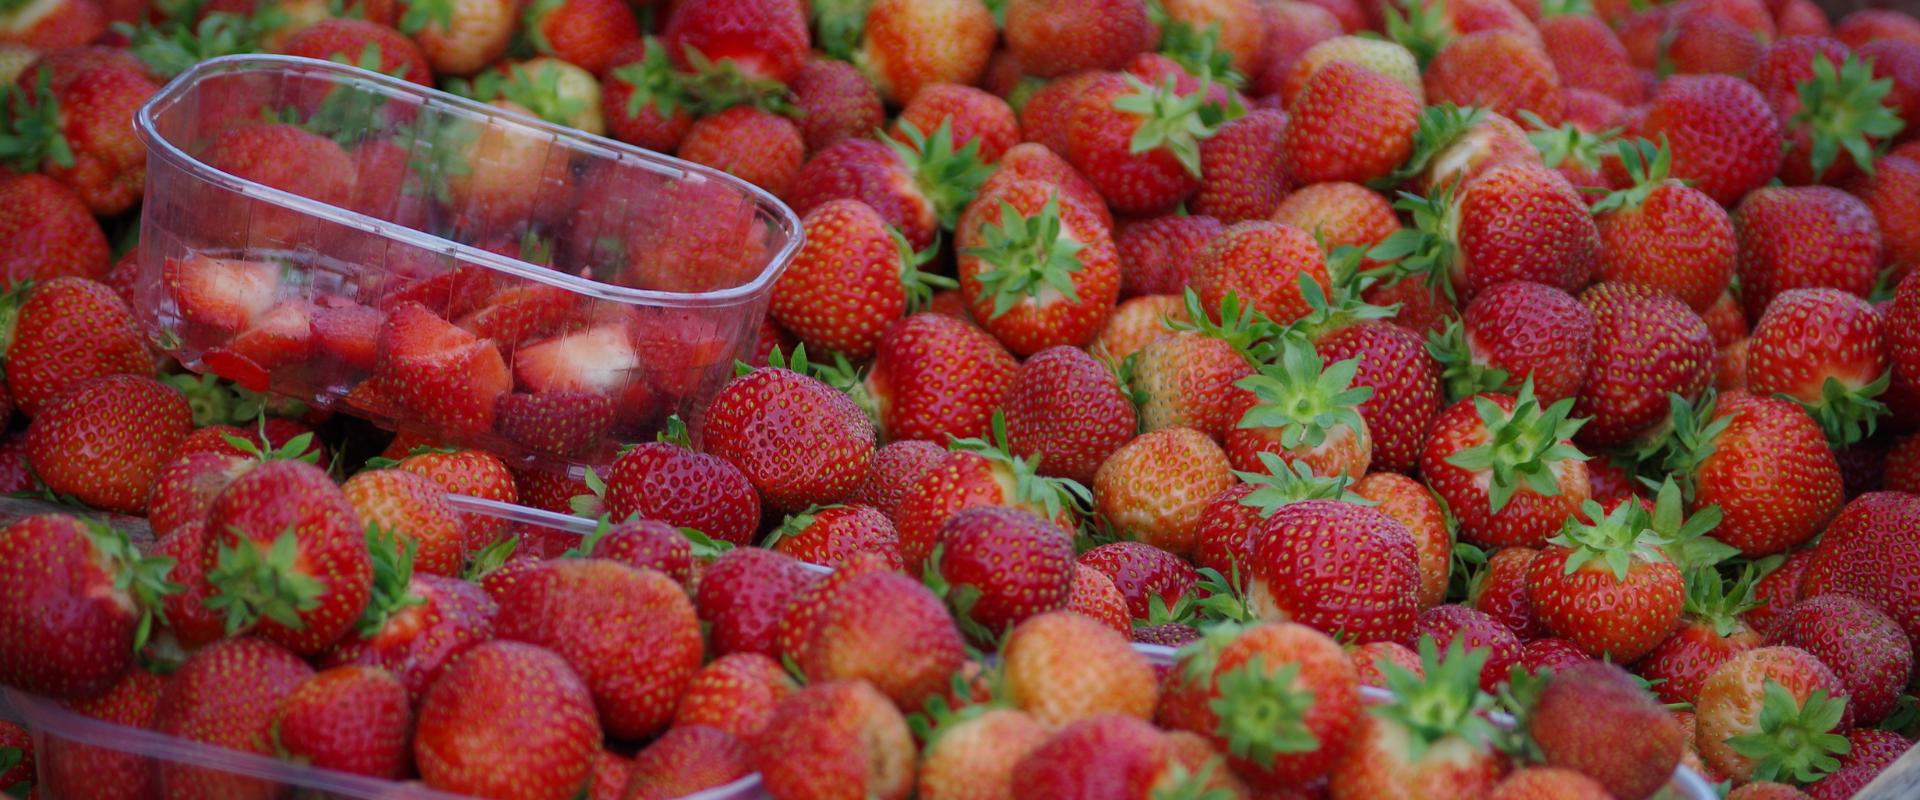 Freiluftmarkt in Tartu: Erdbeeren